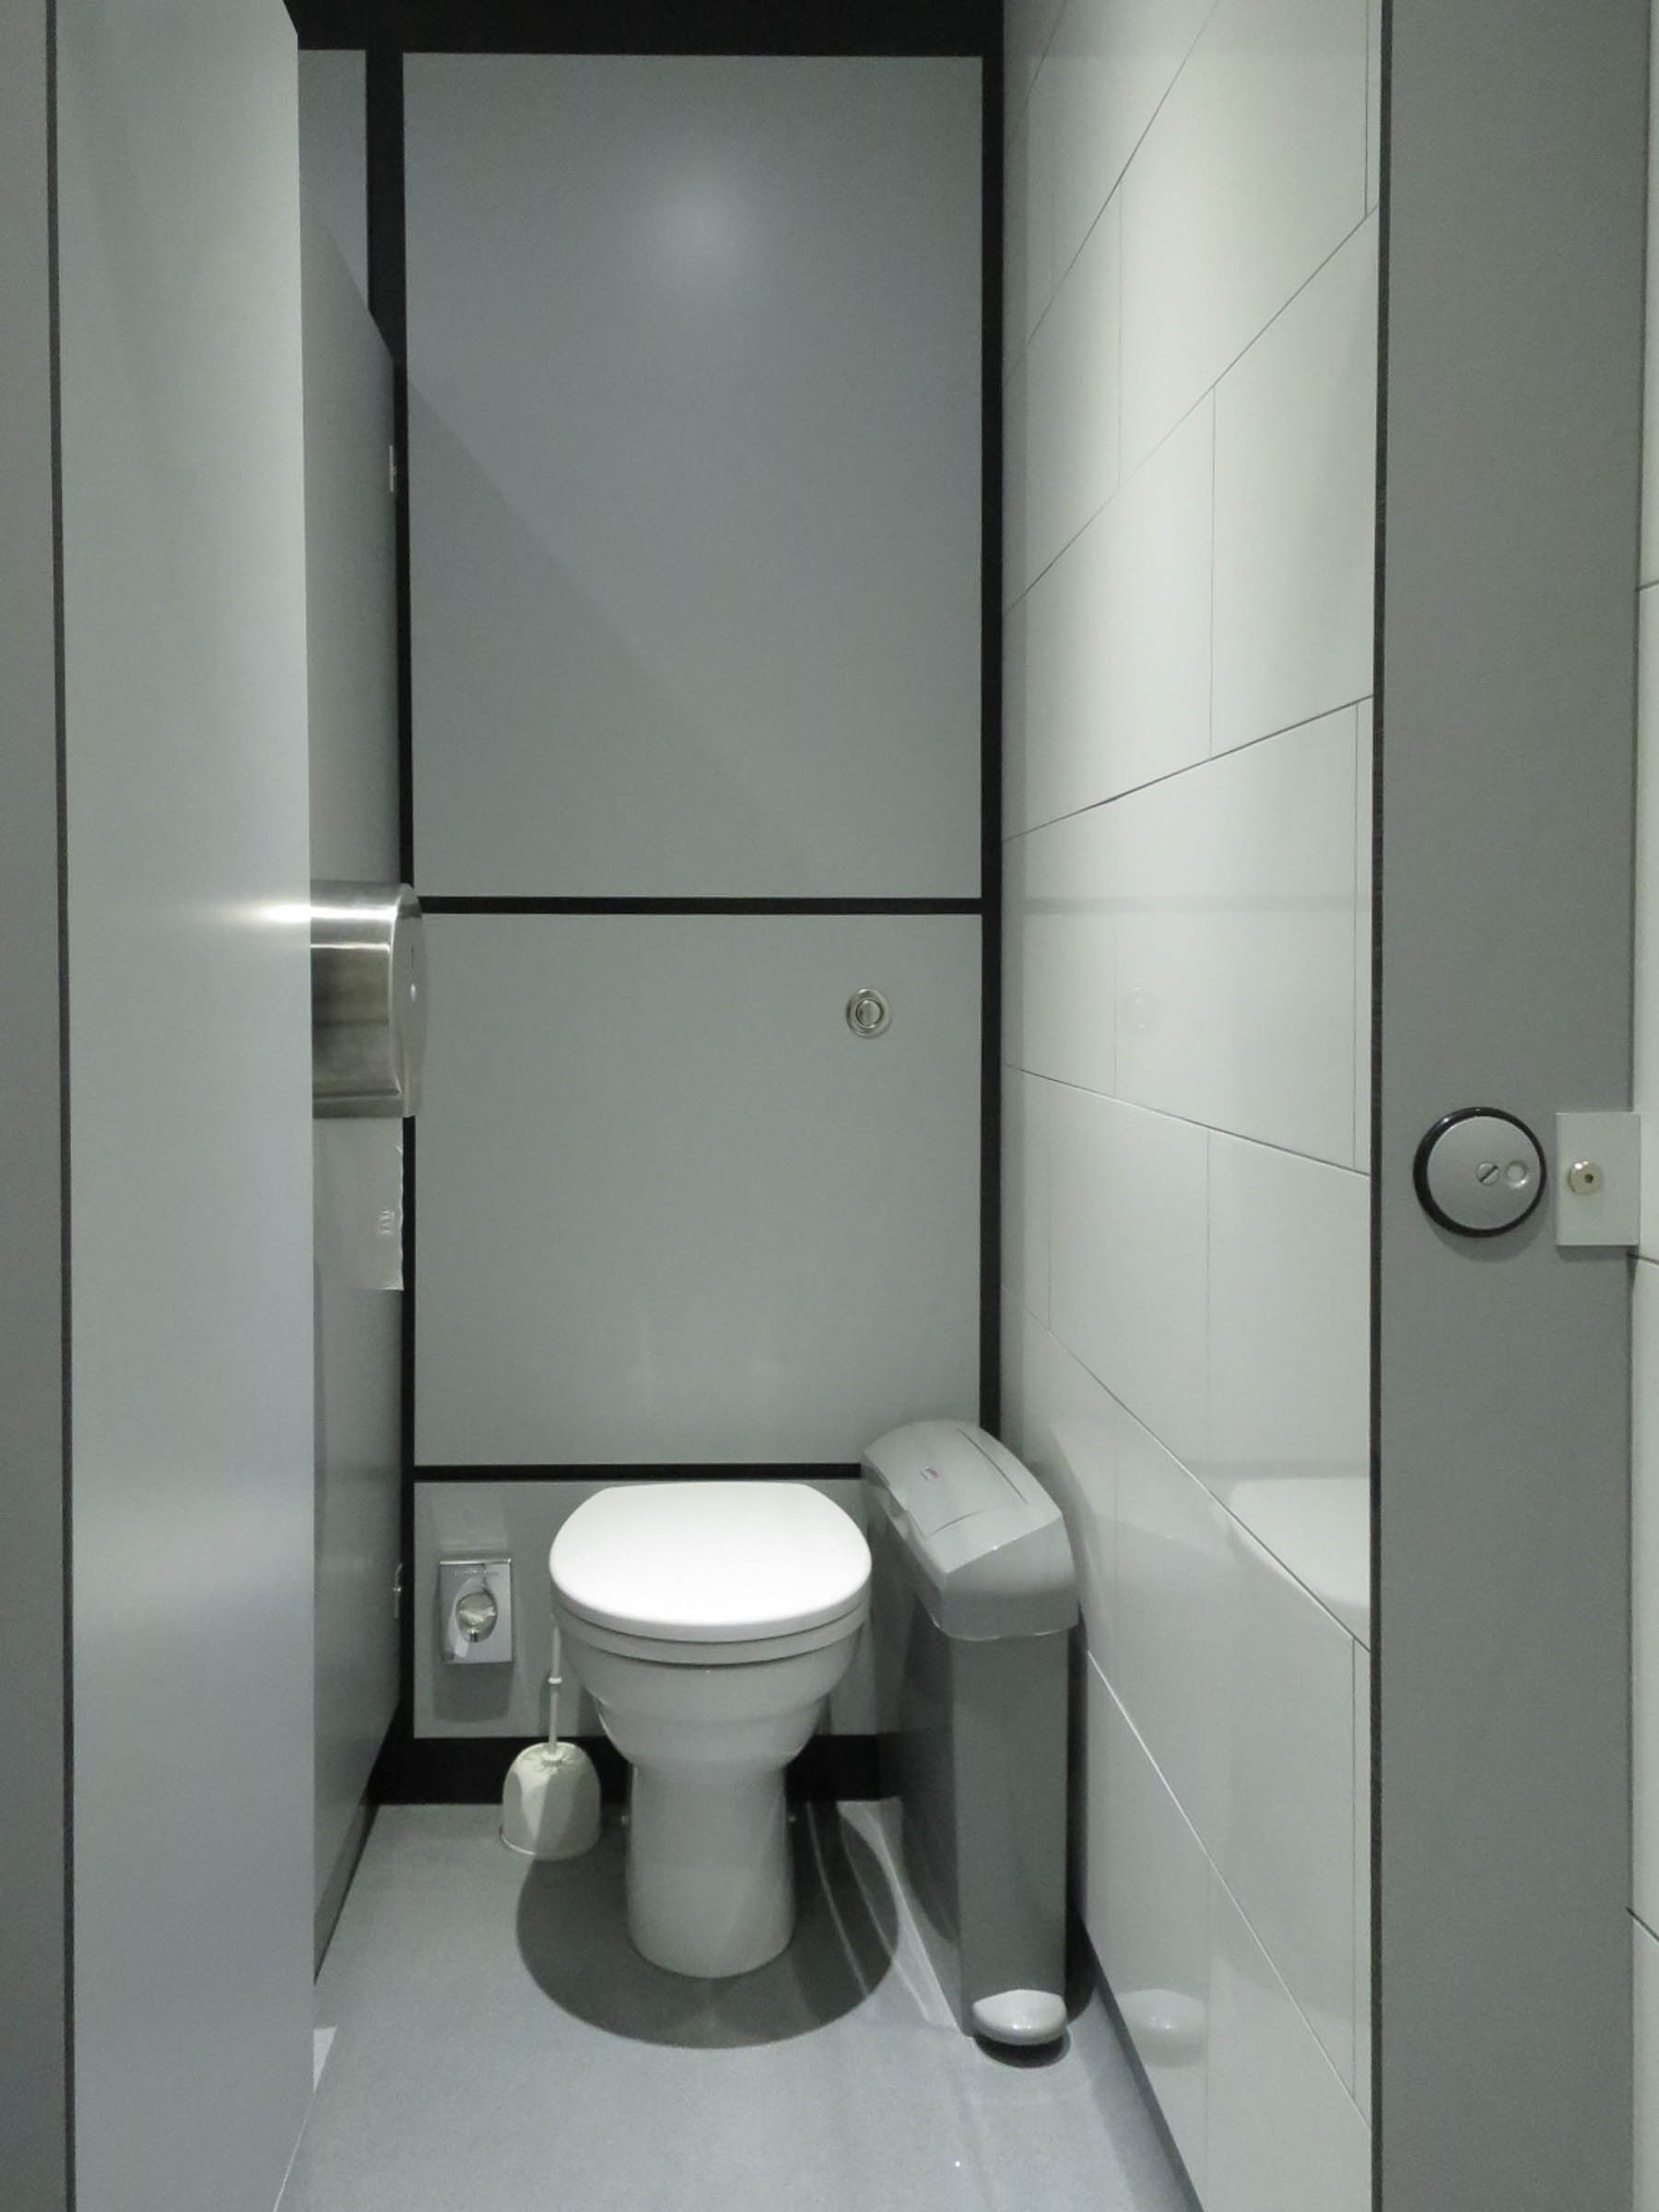 Toilet Cubicle IPS Panels